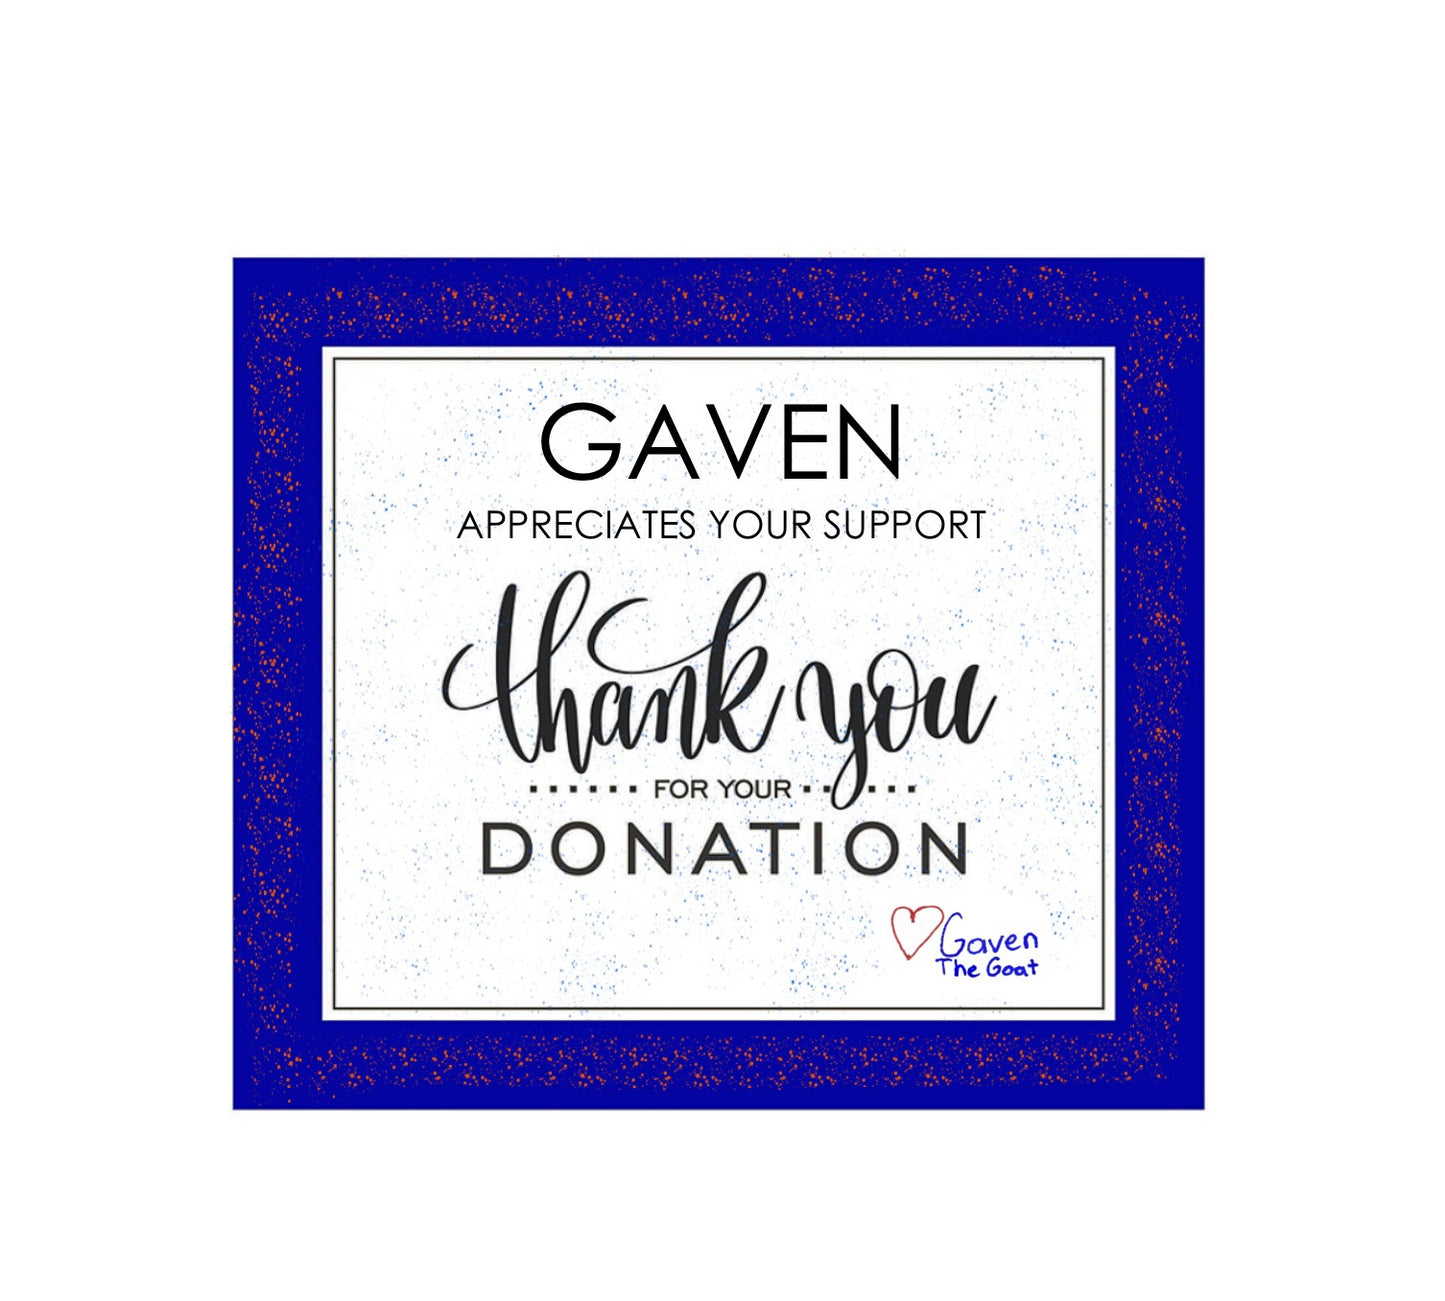 Donation for Gaven/ Donacion para Gaven